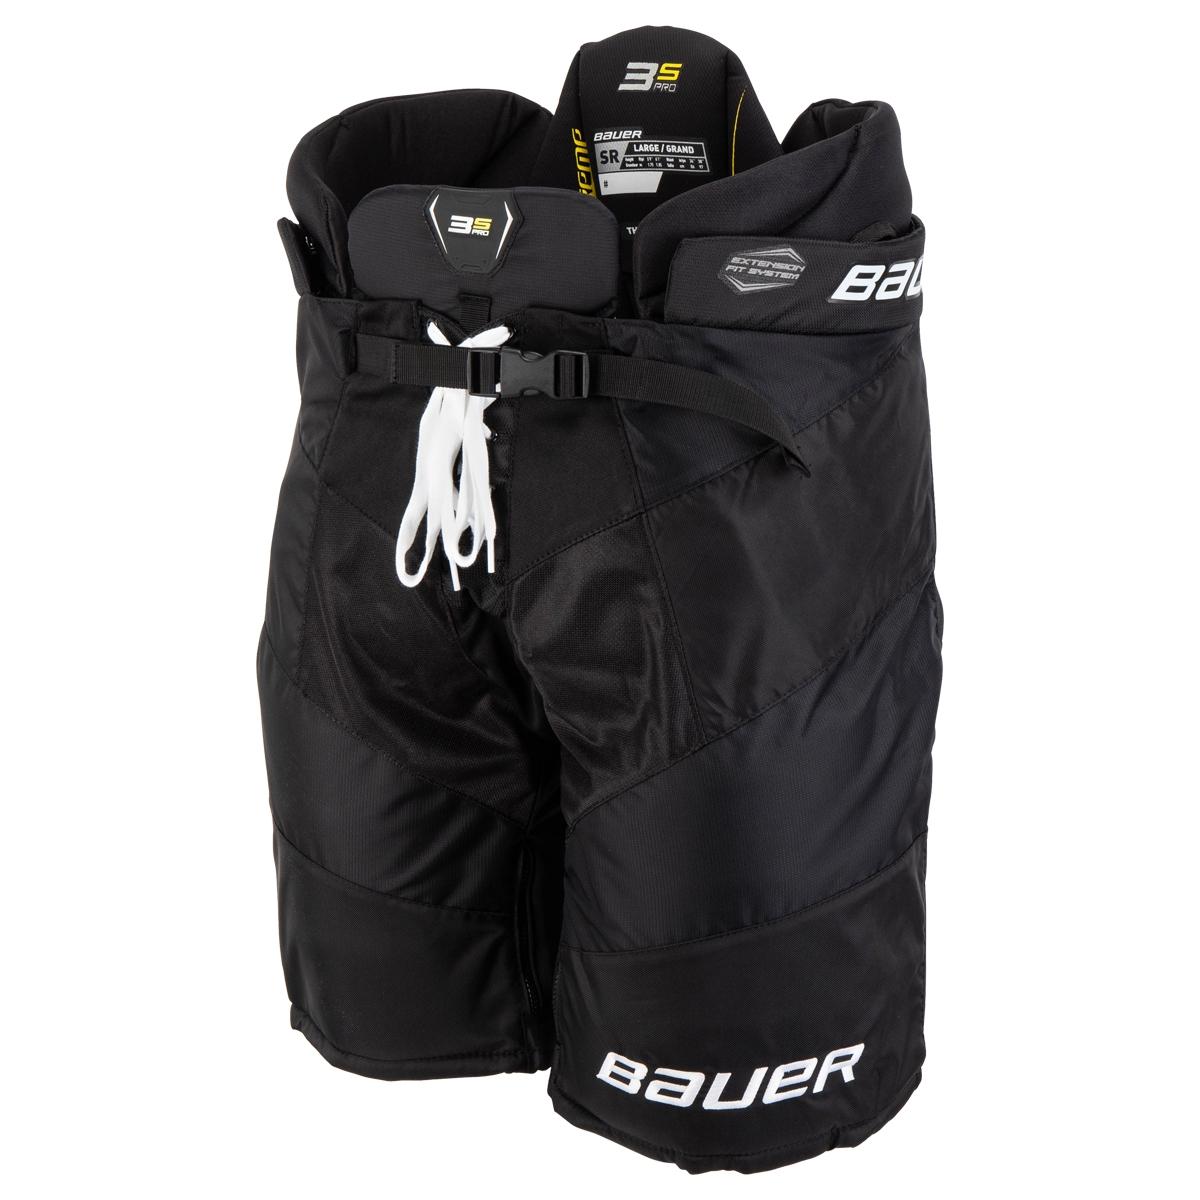 Bauer Supreme 3S Pro Sr. Hockey Pantsproduct zoom image #1